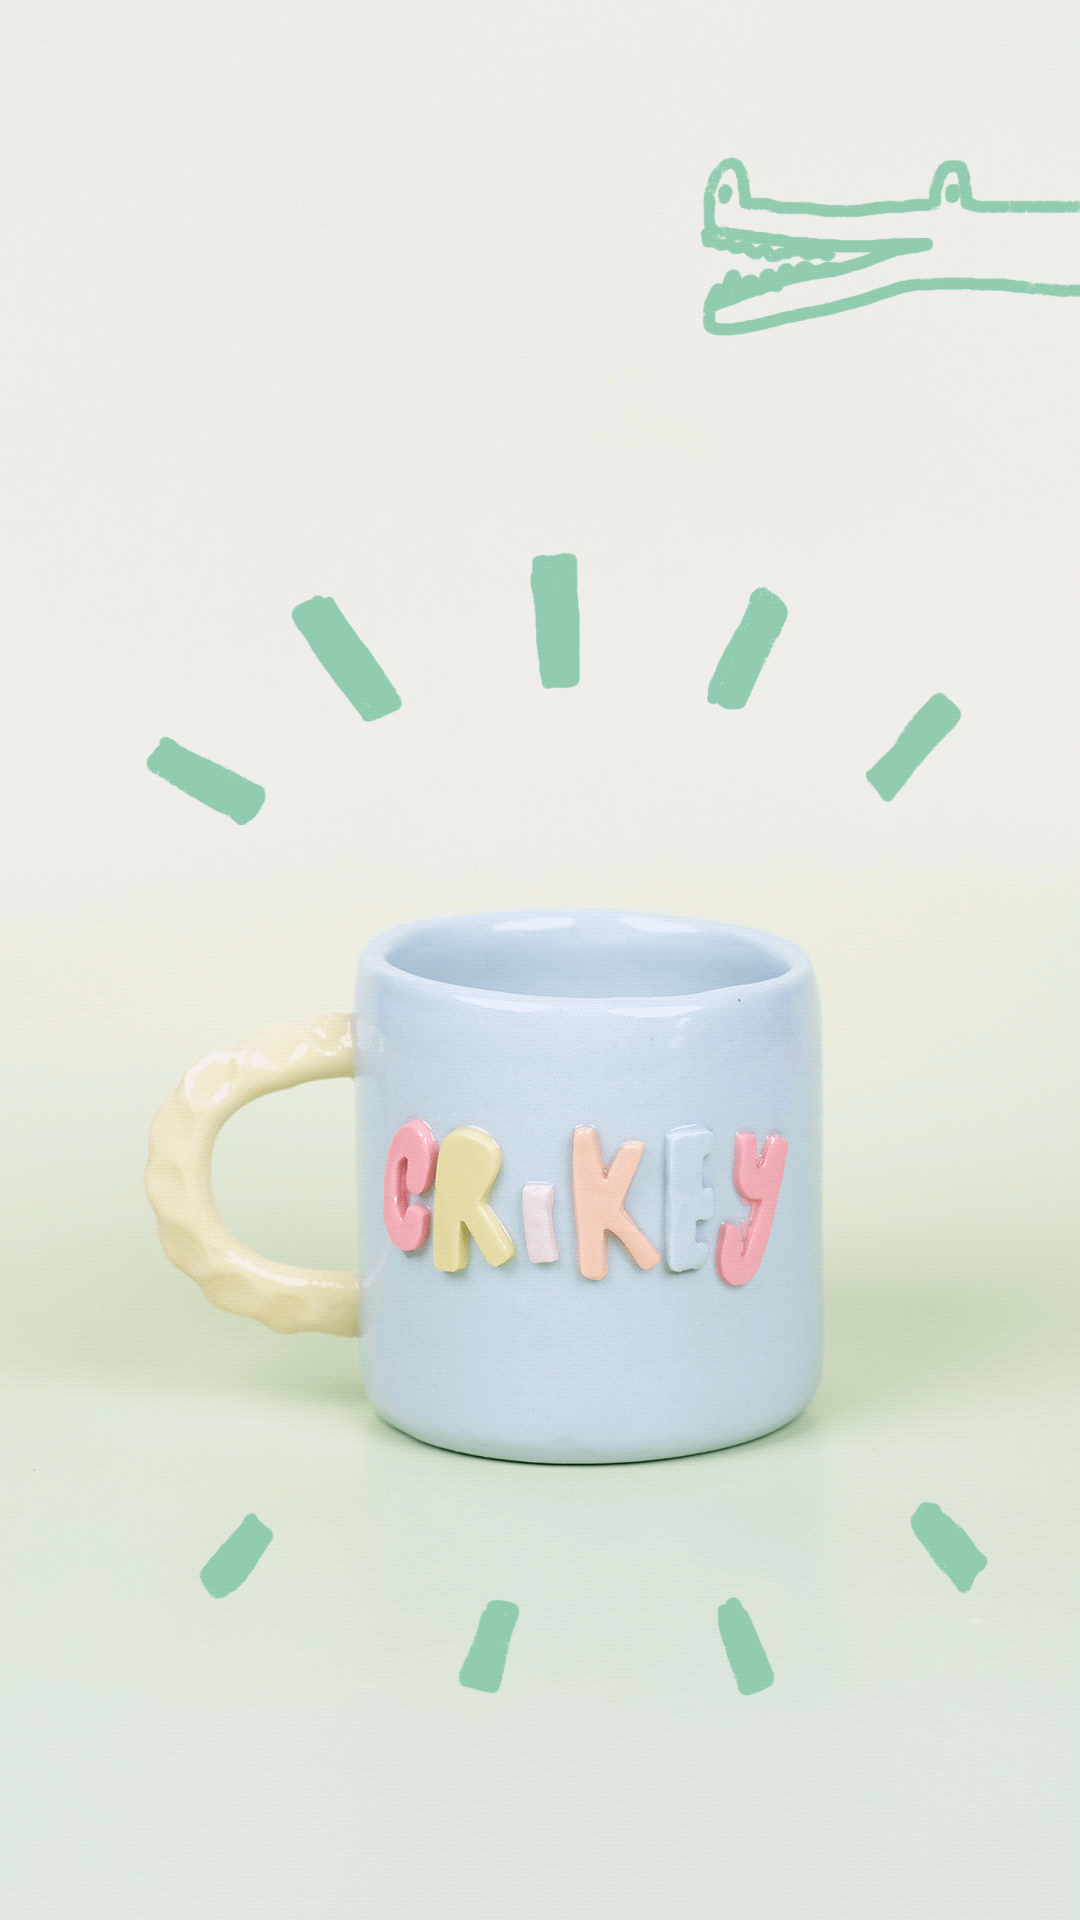 Crikey - Big mug